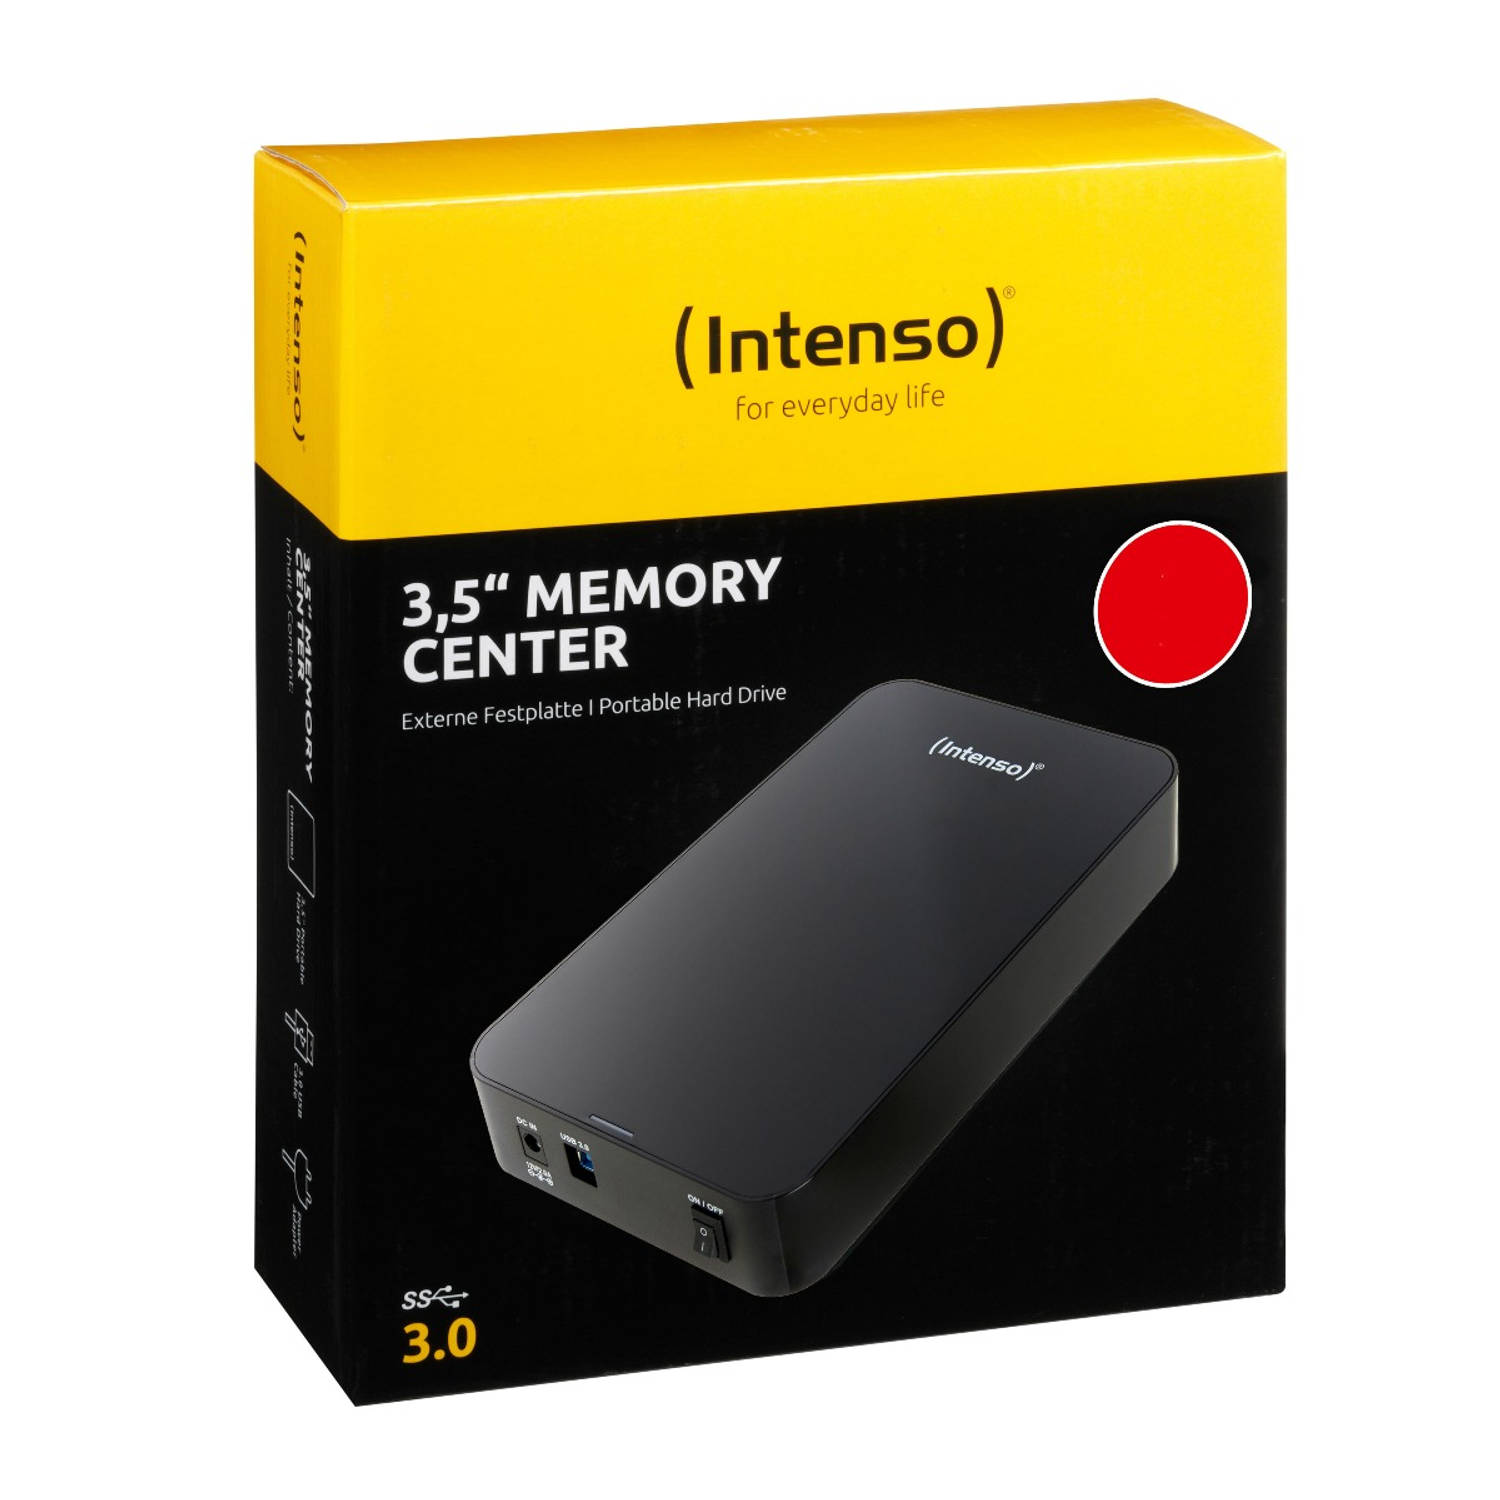 kan niet zien Aubergine Monetair Intenso 6031511 memory center - Externe harde schijf - USB 3.0 - 3.5 inch -  3TB | Blokker